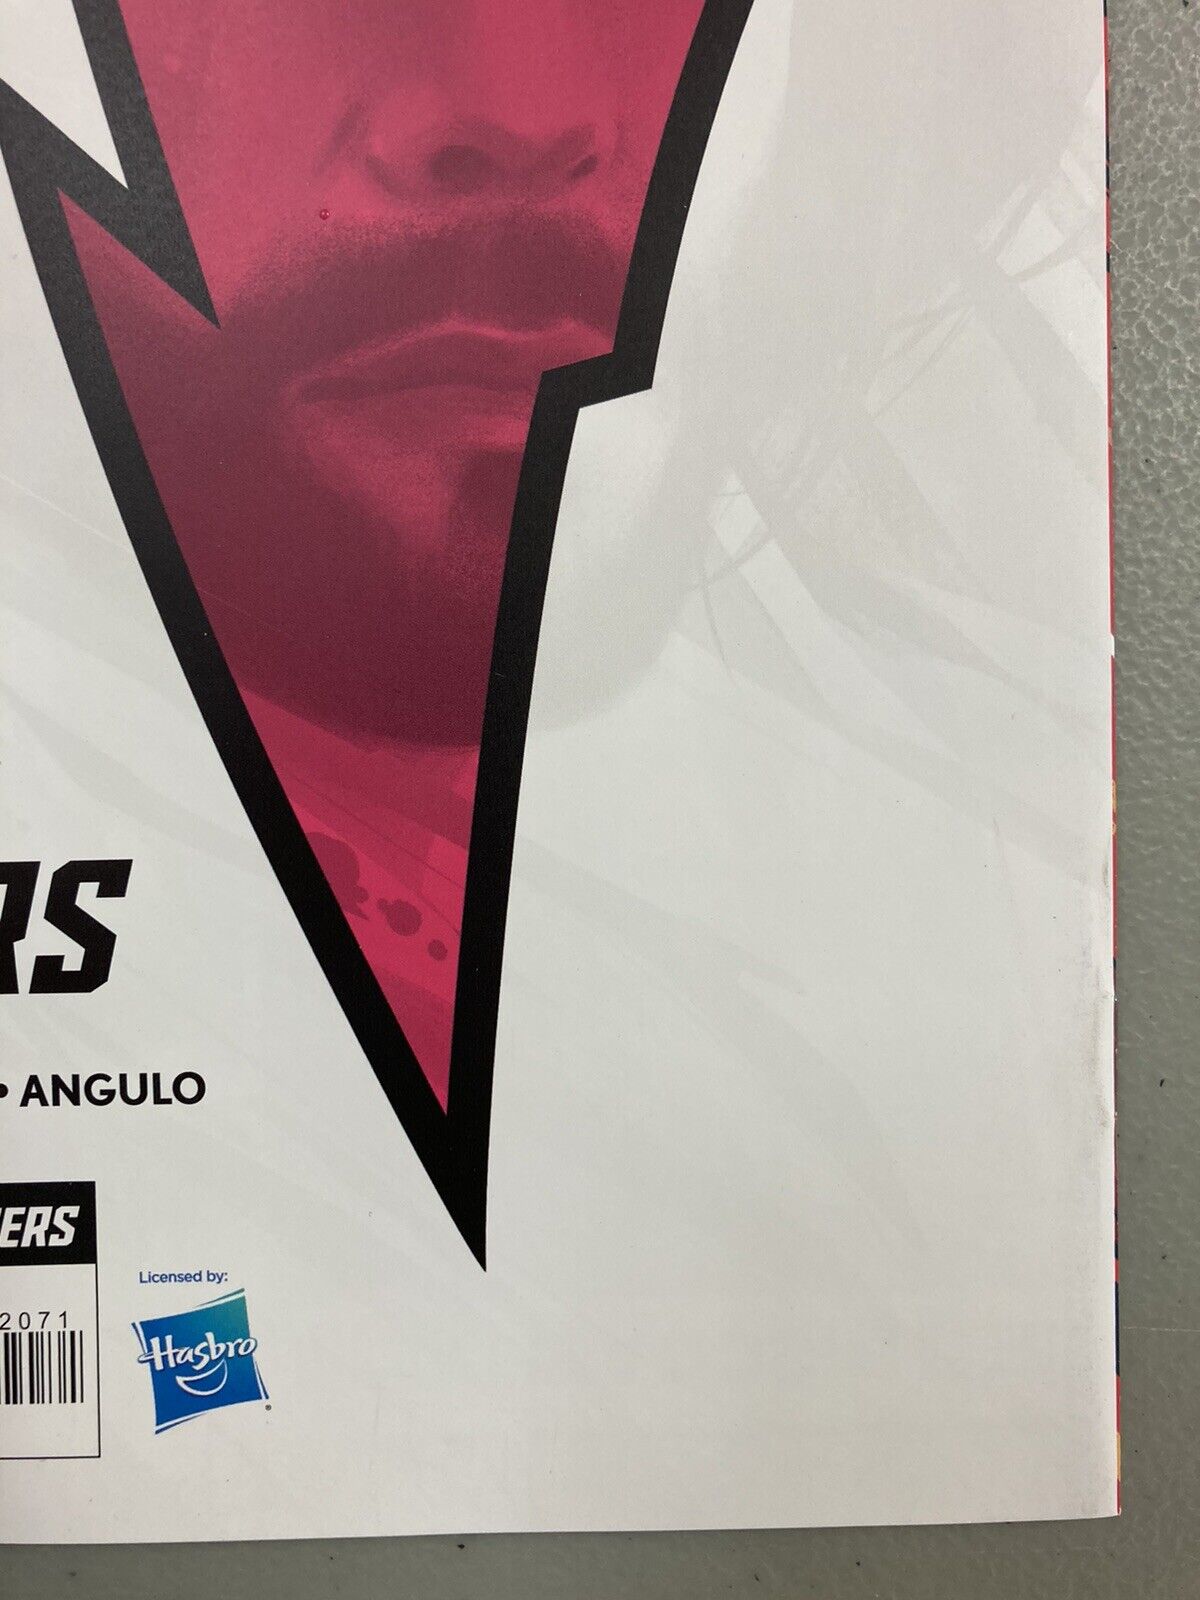 Power Rangers (2021) #12 - Virgin Goni Montes One Per Store Variant - Boom!